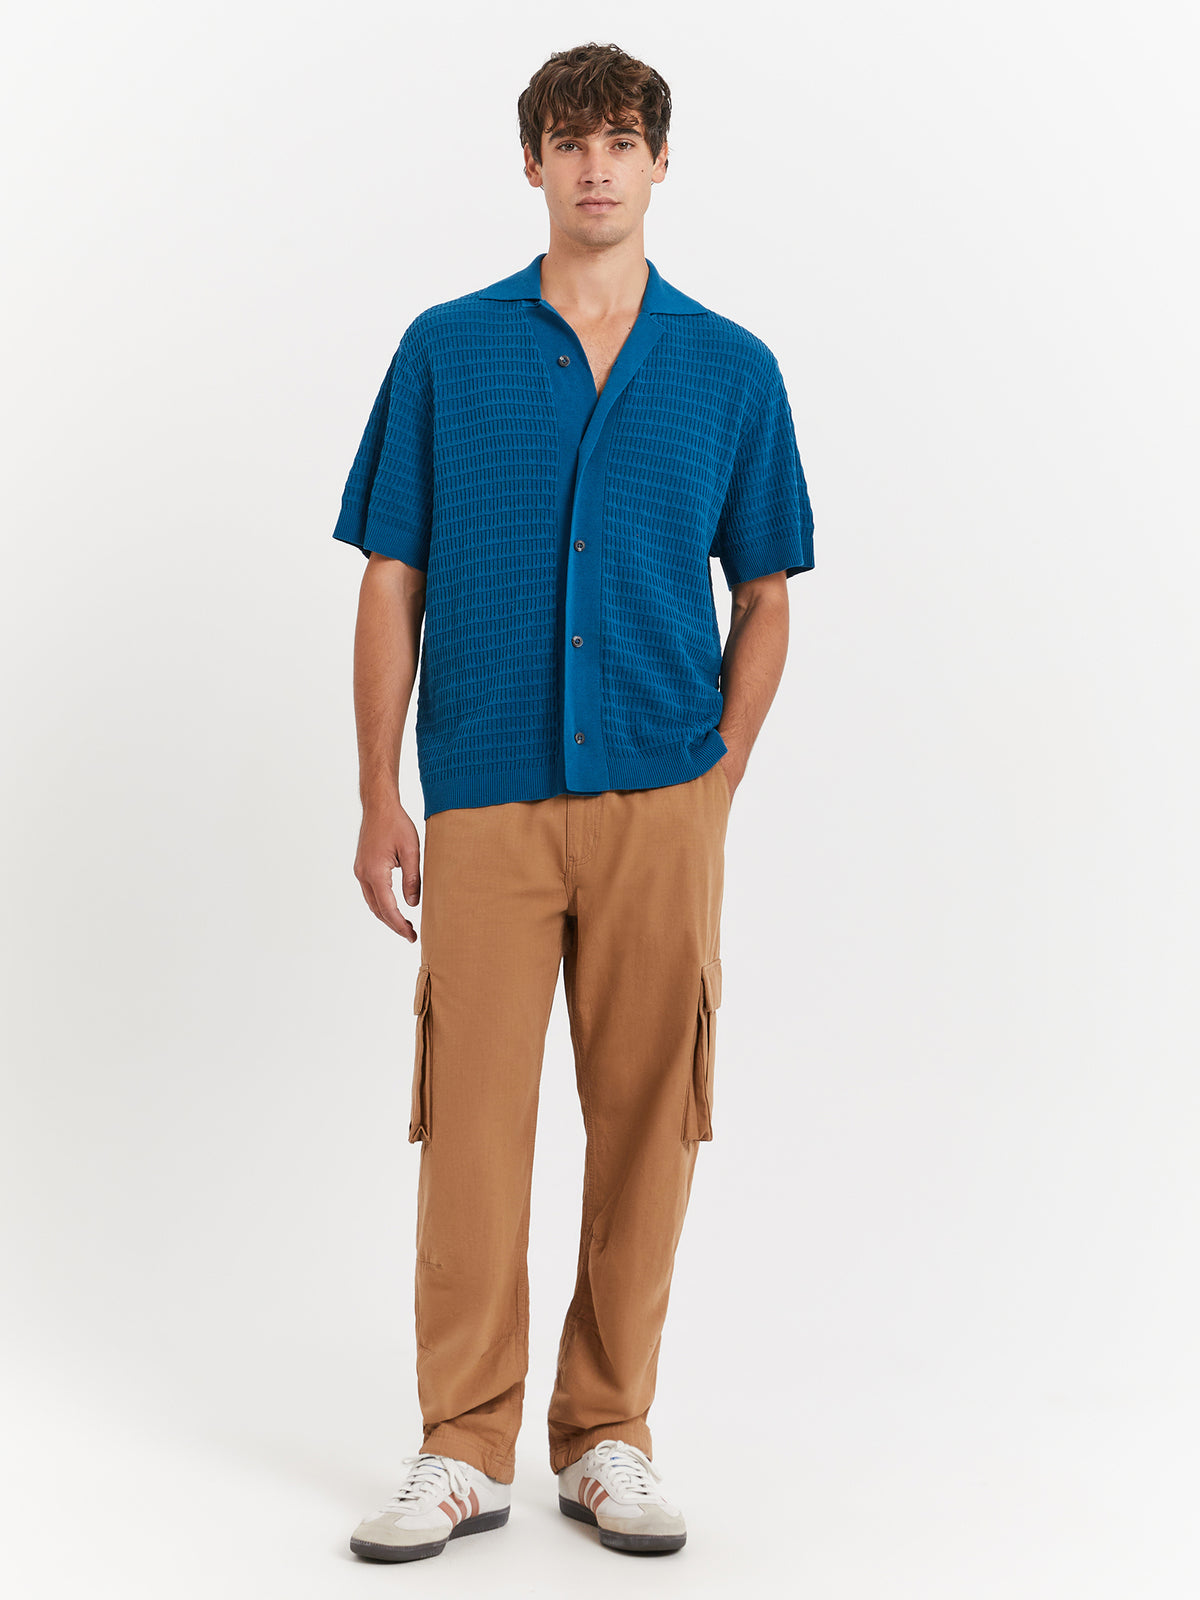 Zanito Knit Shirt in Aegean Blue